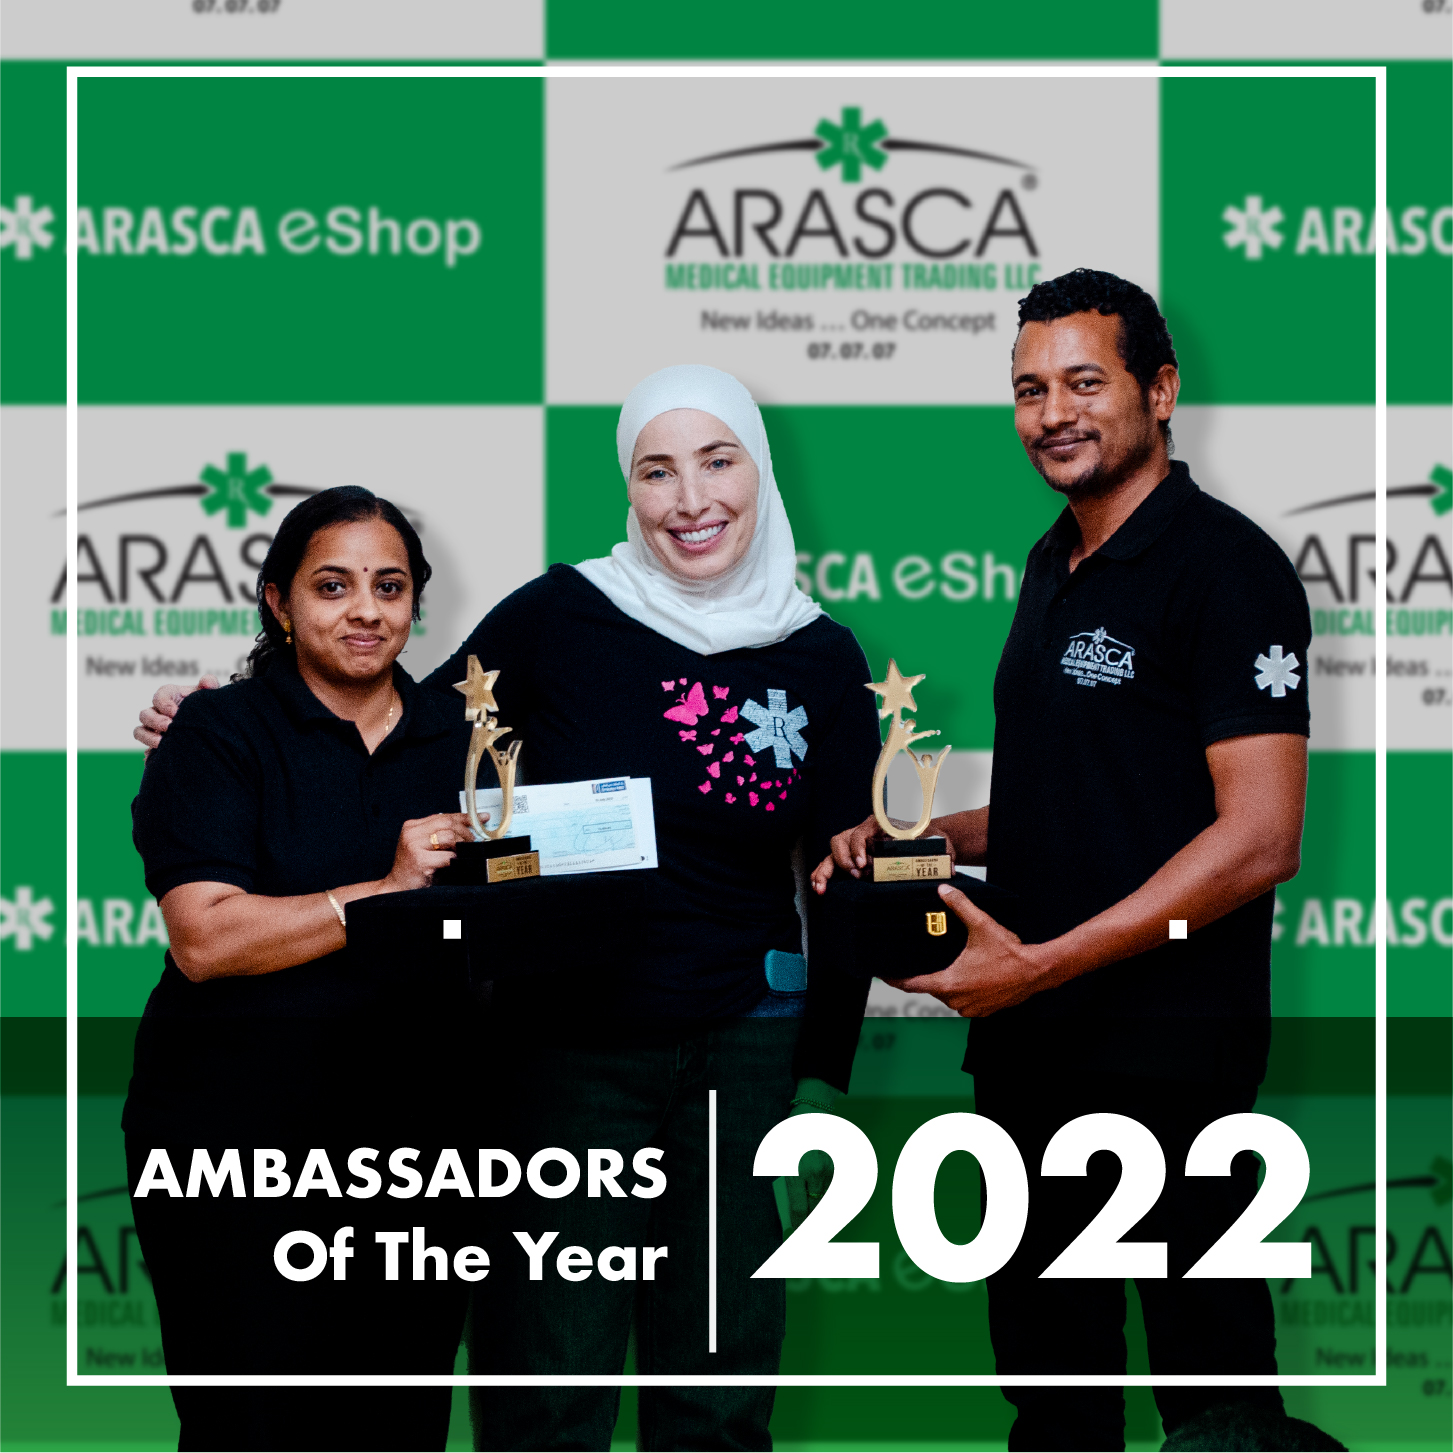 Ambassadors of the Year 2022